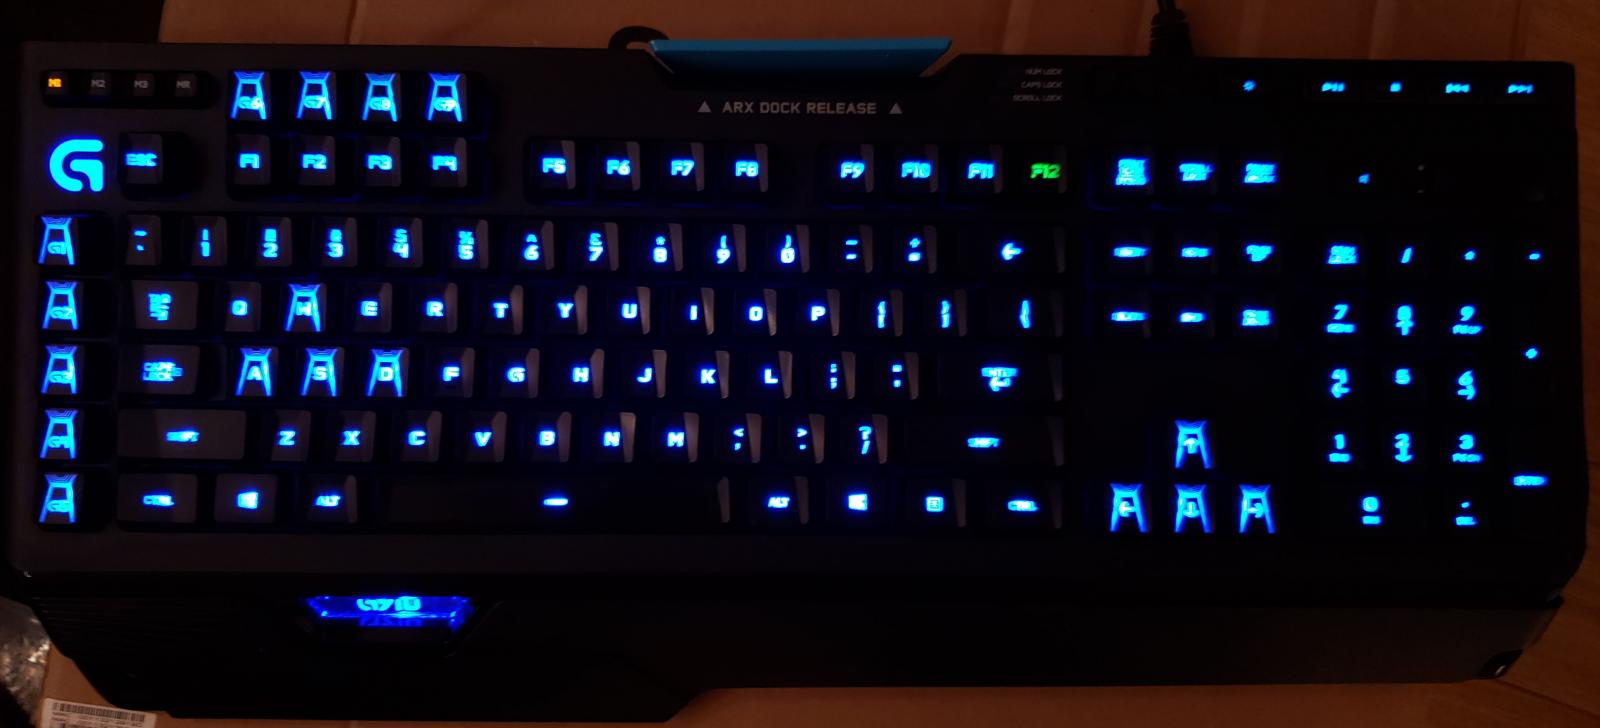 For sale Logitech G910 Orion Spark RGB mechanical keyboard